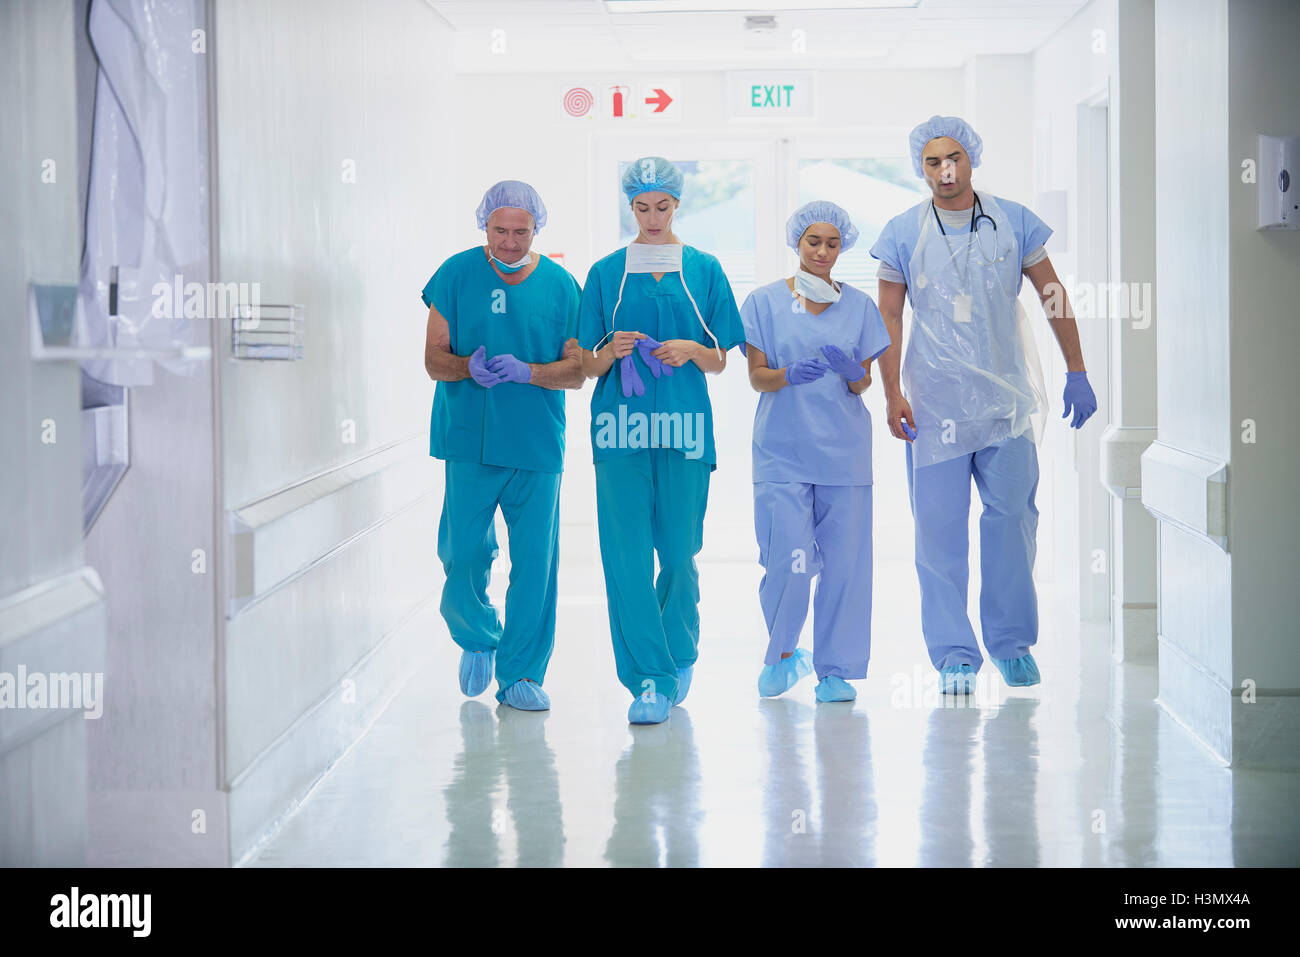 Four medical staff wearing scrubs walking in hospital corridor Stock Photo